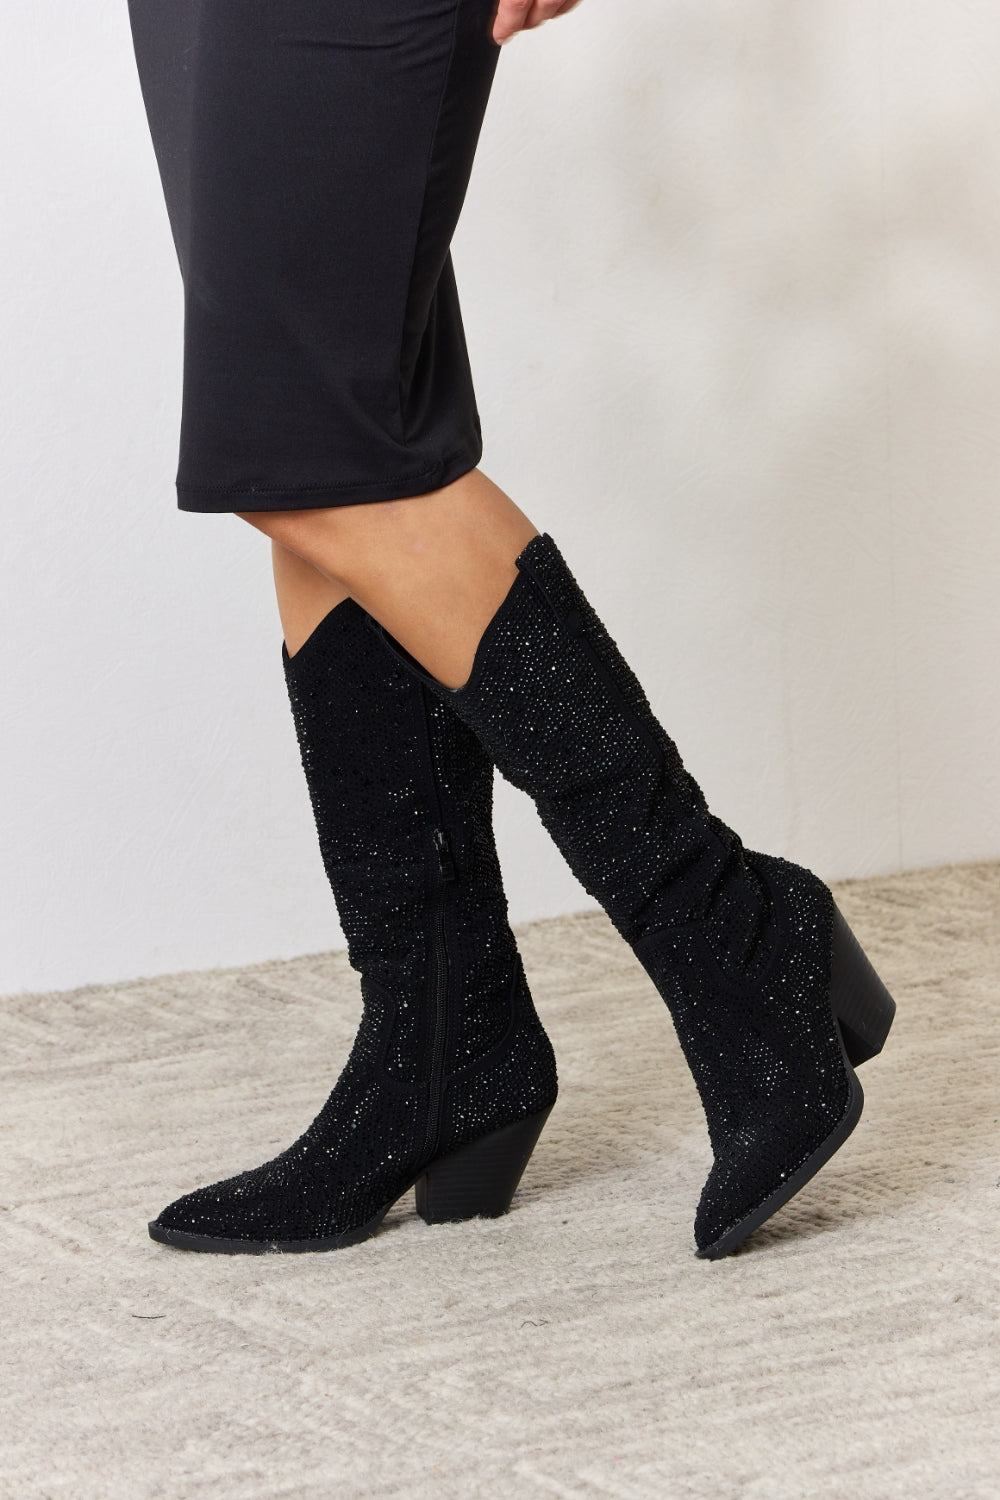 Black Rhinestone Knee High Cowboy Boots - Inspired Eye Boutique